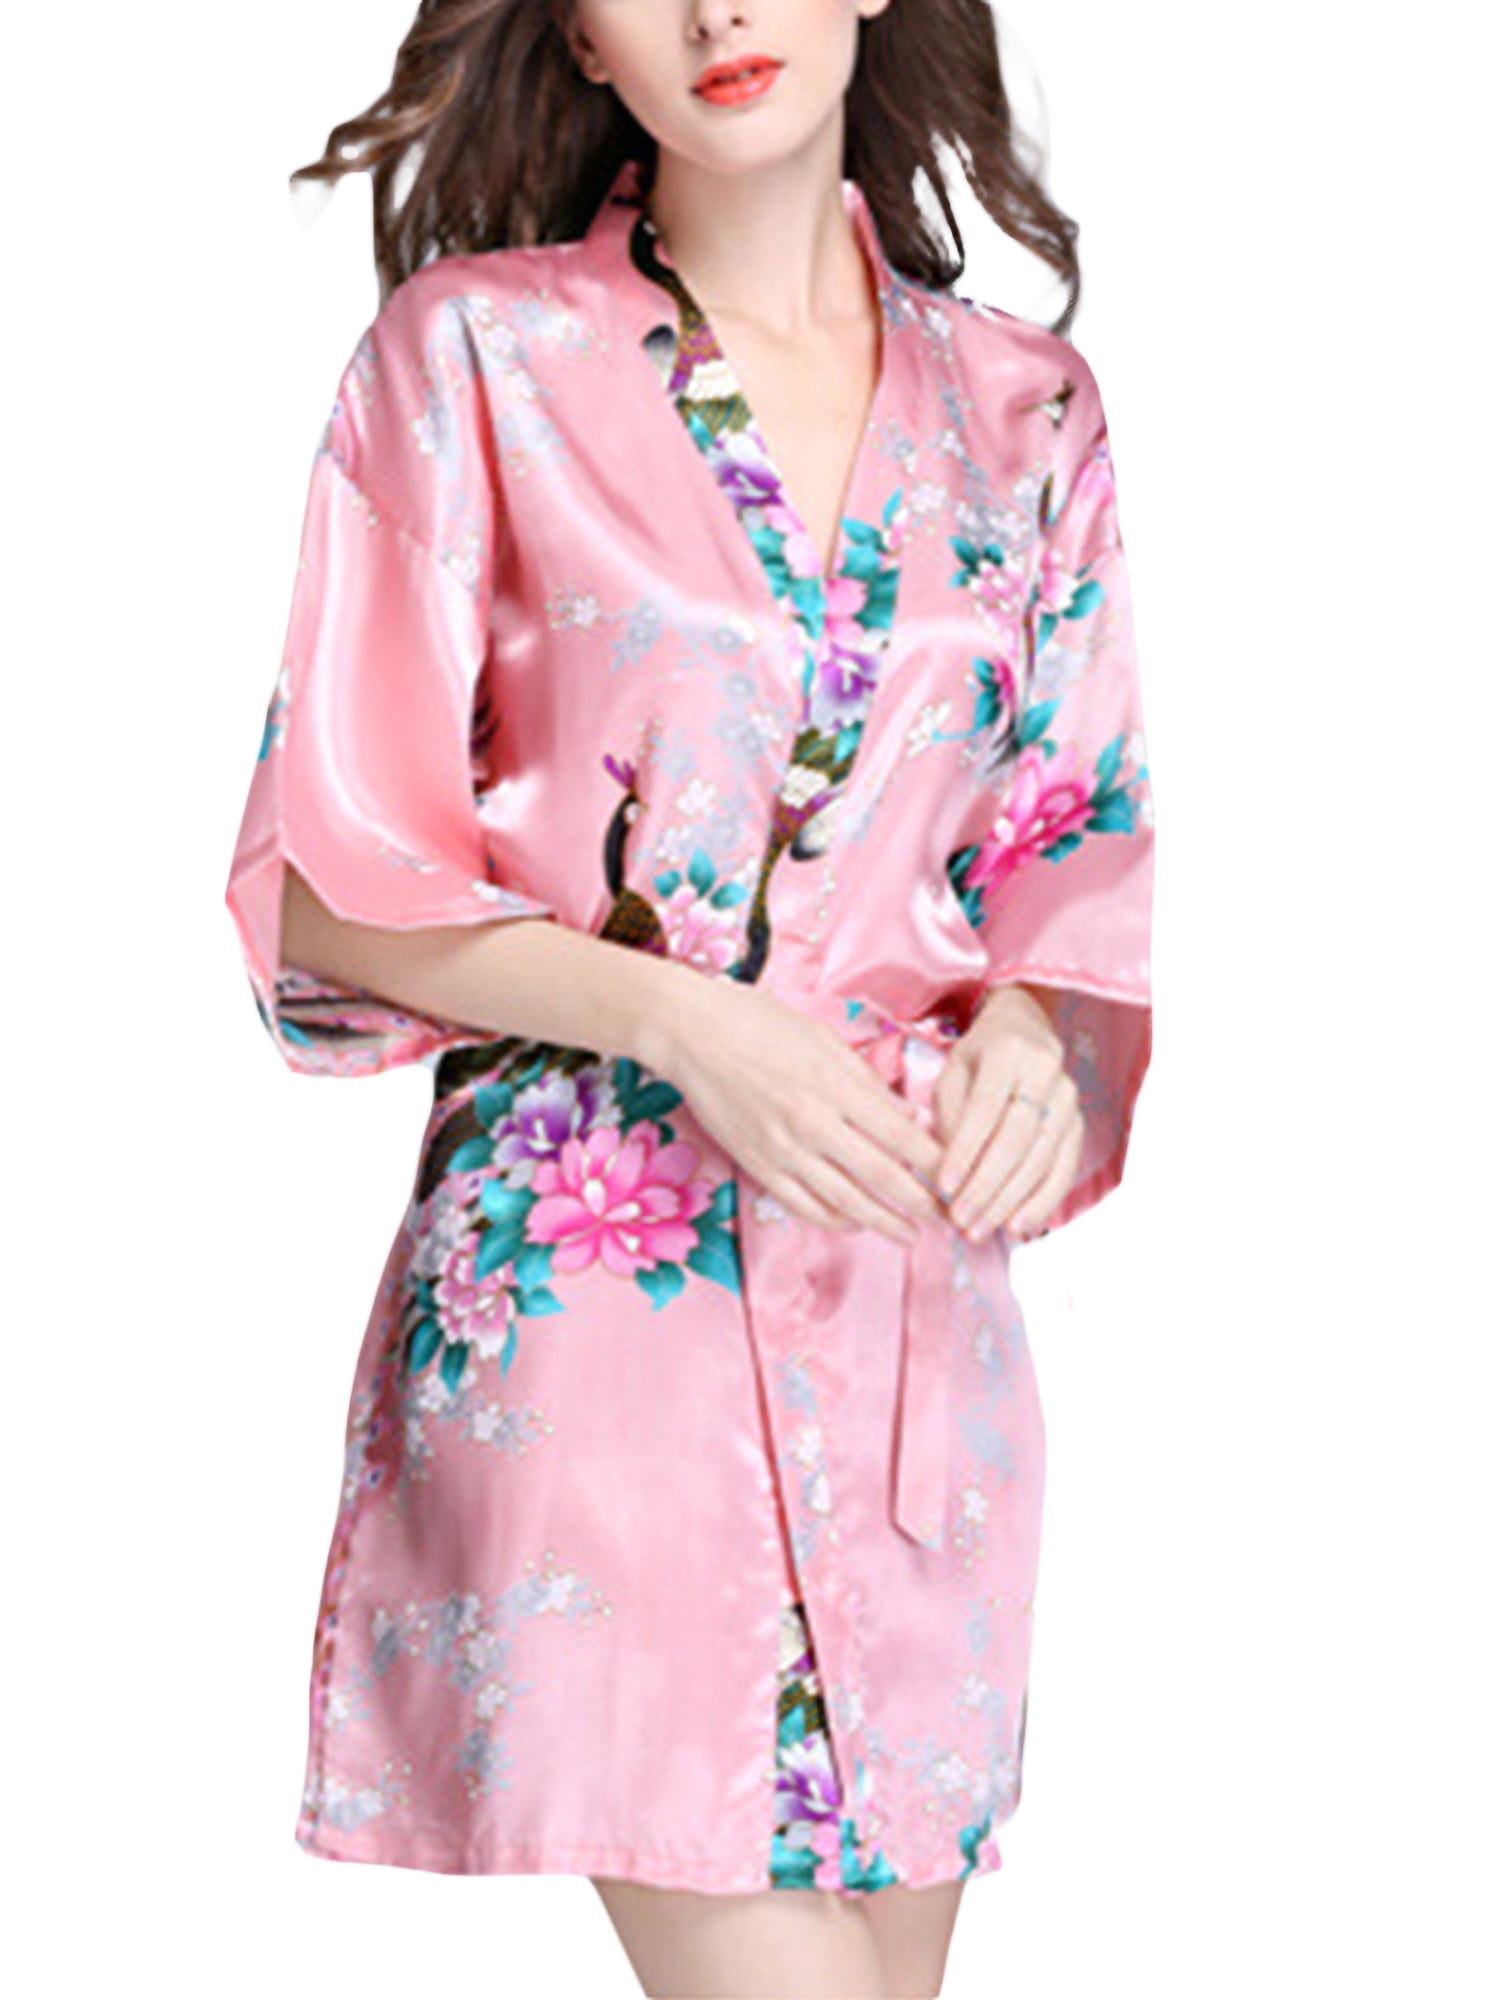 Long Cotton Kimono Handmade floral print Cover up Bath Robes,Beach Wear Dress Gift for her Wedding Bridal Robe Bridesmaids Sleepwear